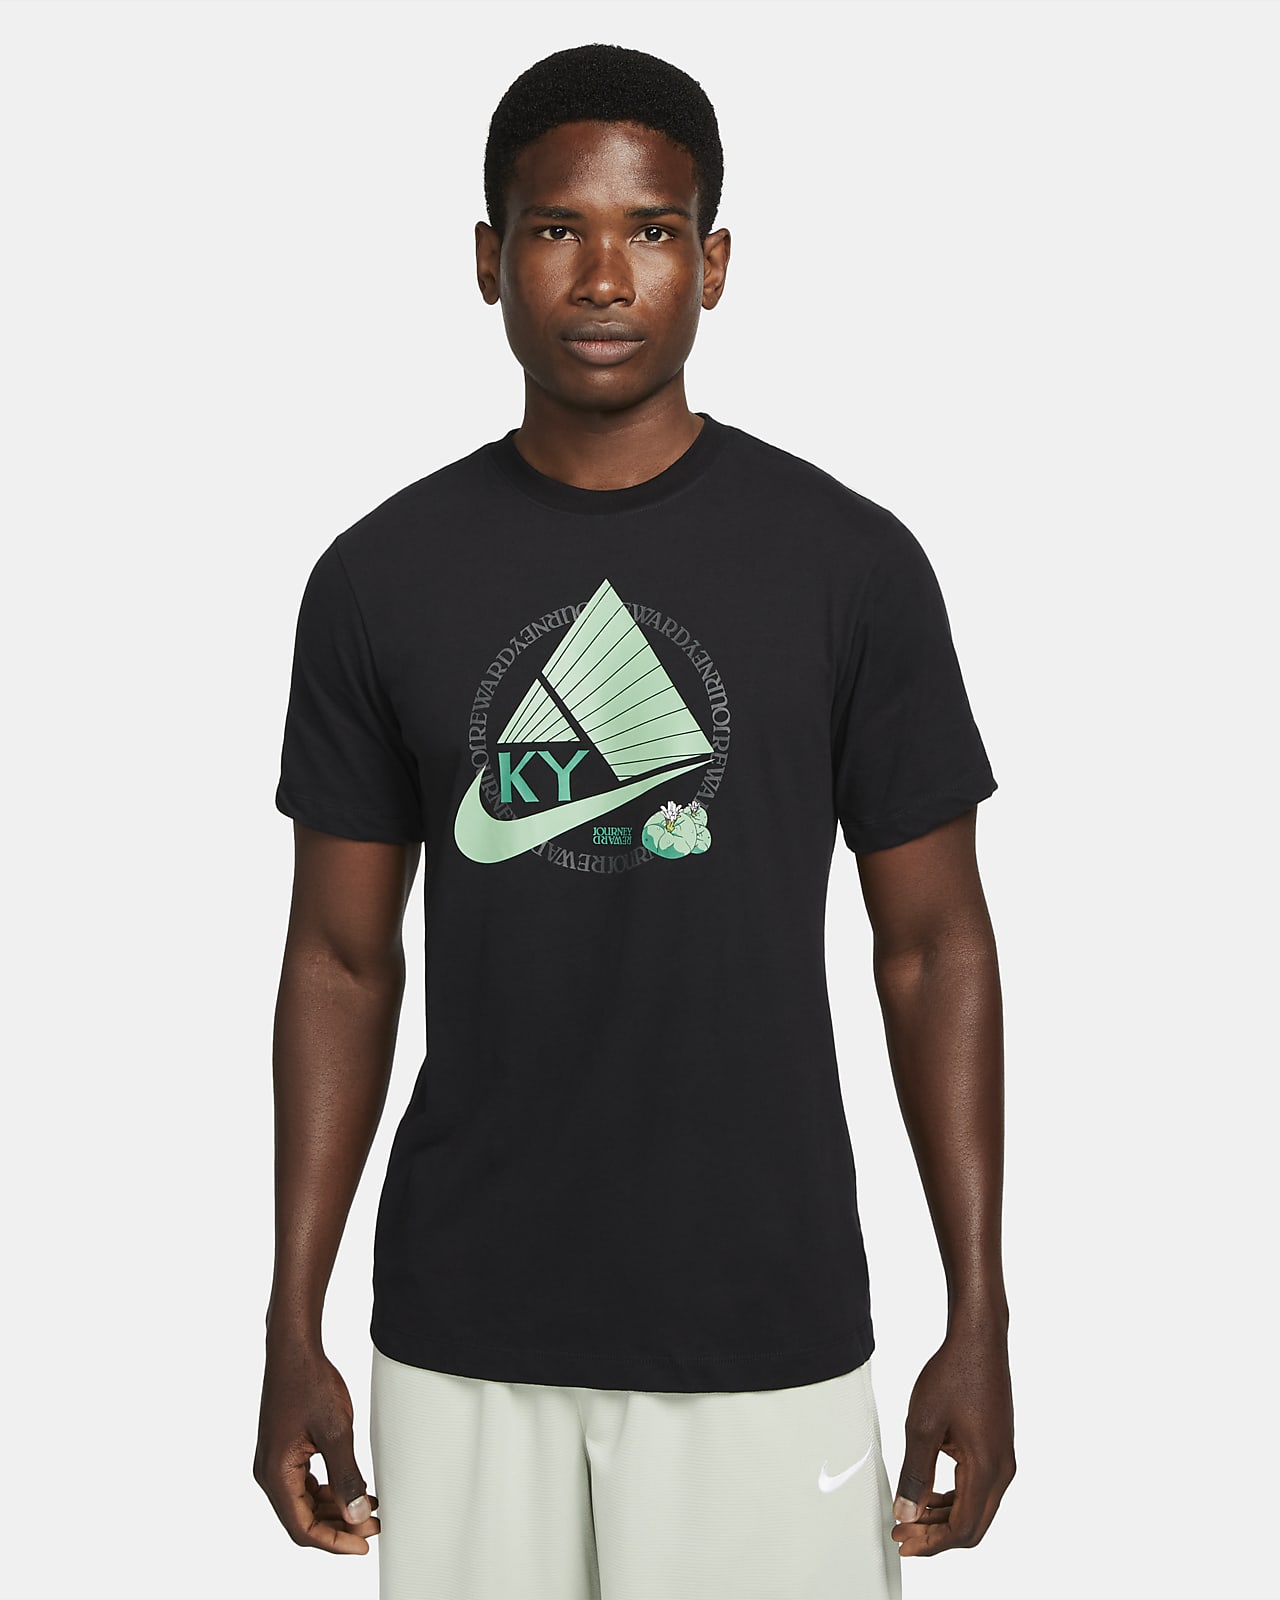 Kyrie Nike Dri-FIT Men's Basketball T-Shirt